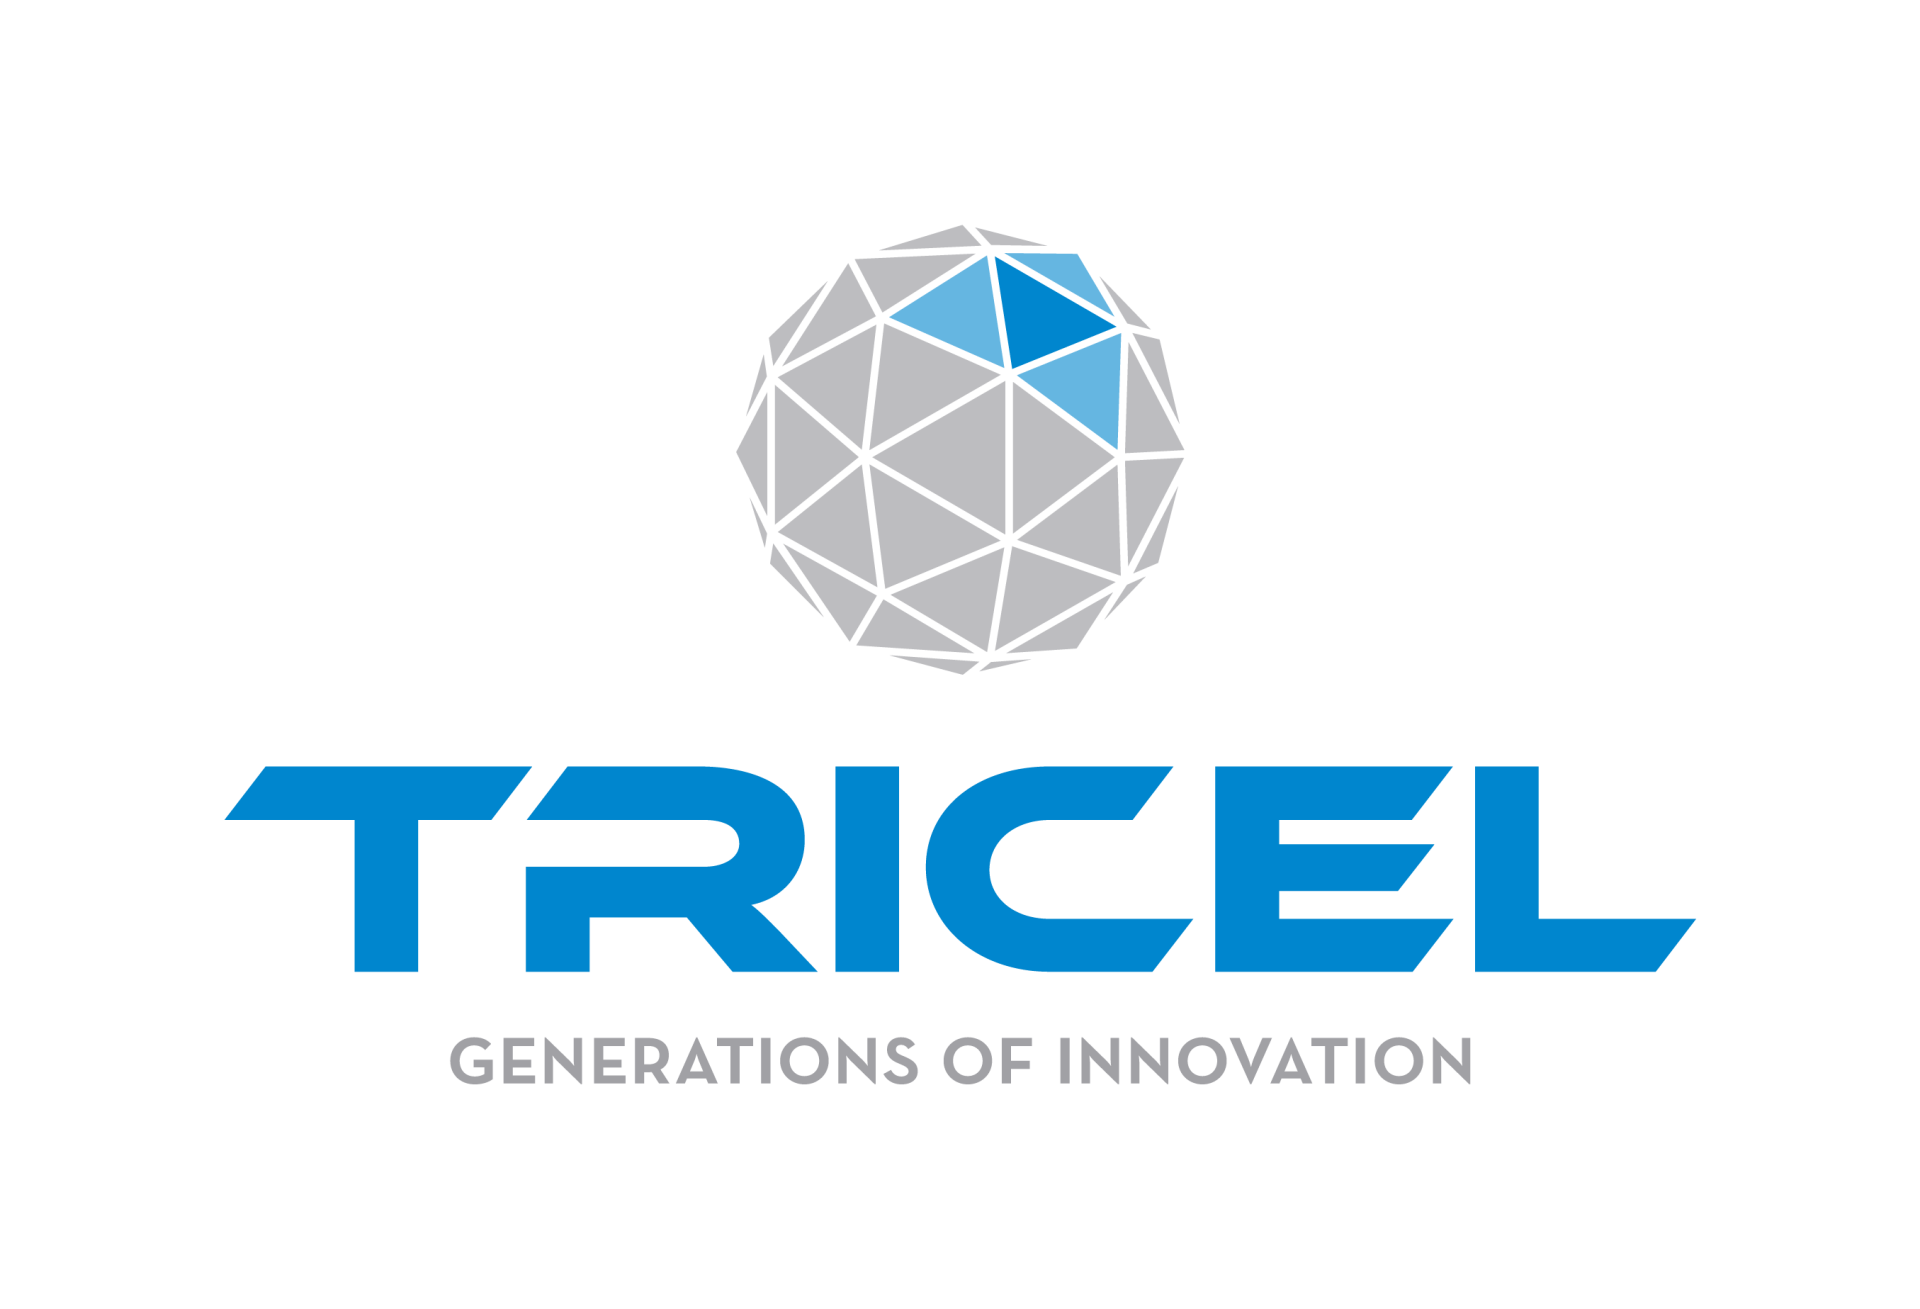 Tricel - Generations of innovation